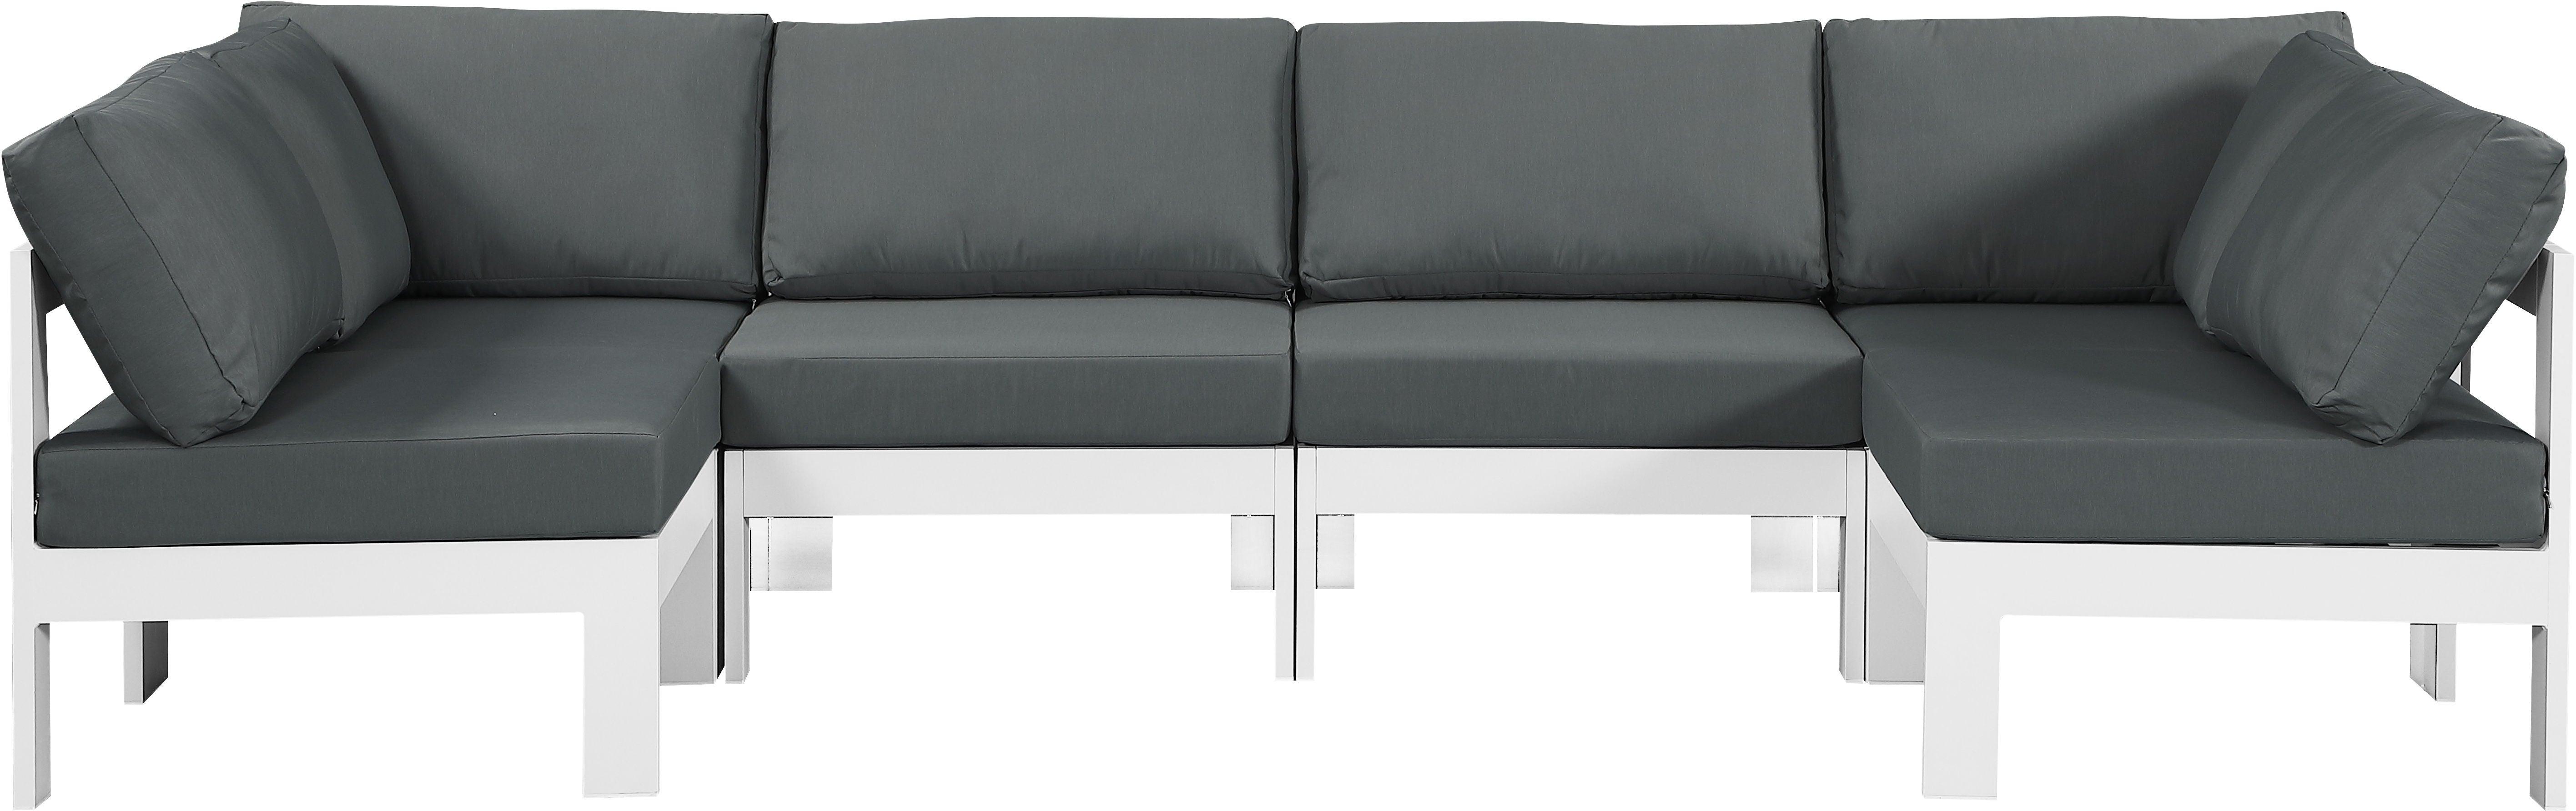 Meridian Furniture - Nizuc - Outdoor Patio Modular Sectional 6 Piece - Grey - Fabric - 5th Avenue Furniture